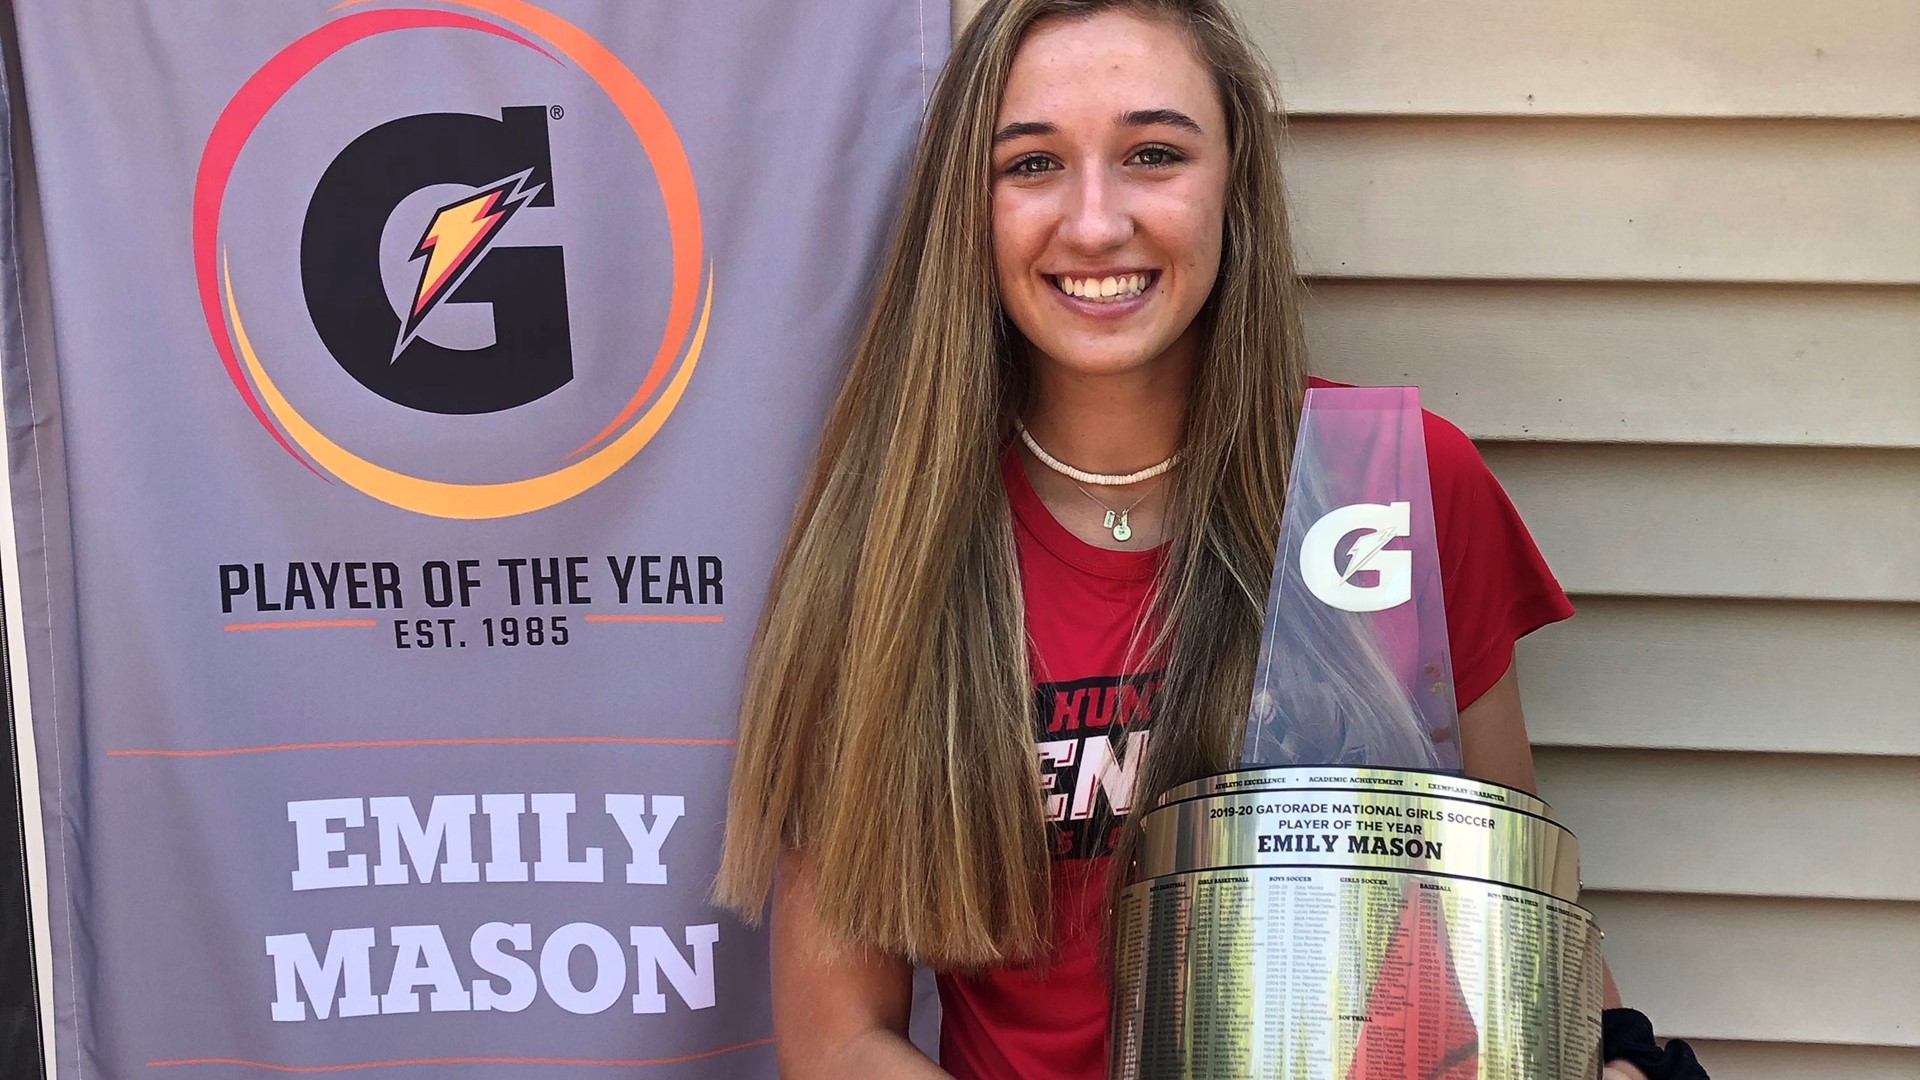 2019-20 Gatorade National Girls Soccer Player of the Year Award Winner Emily Mason